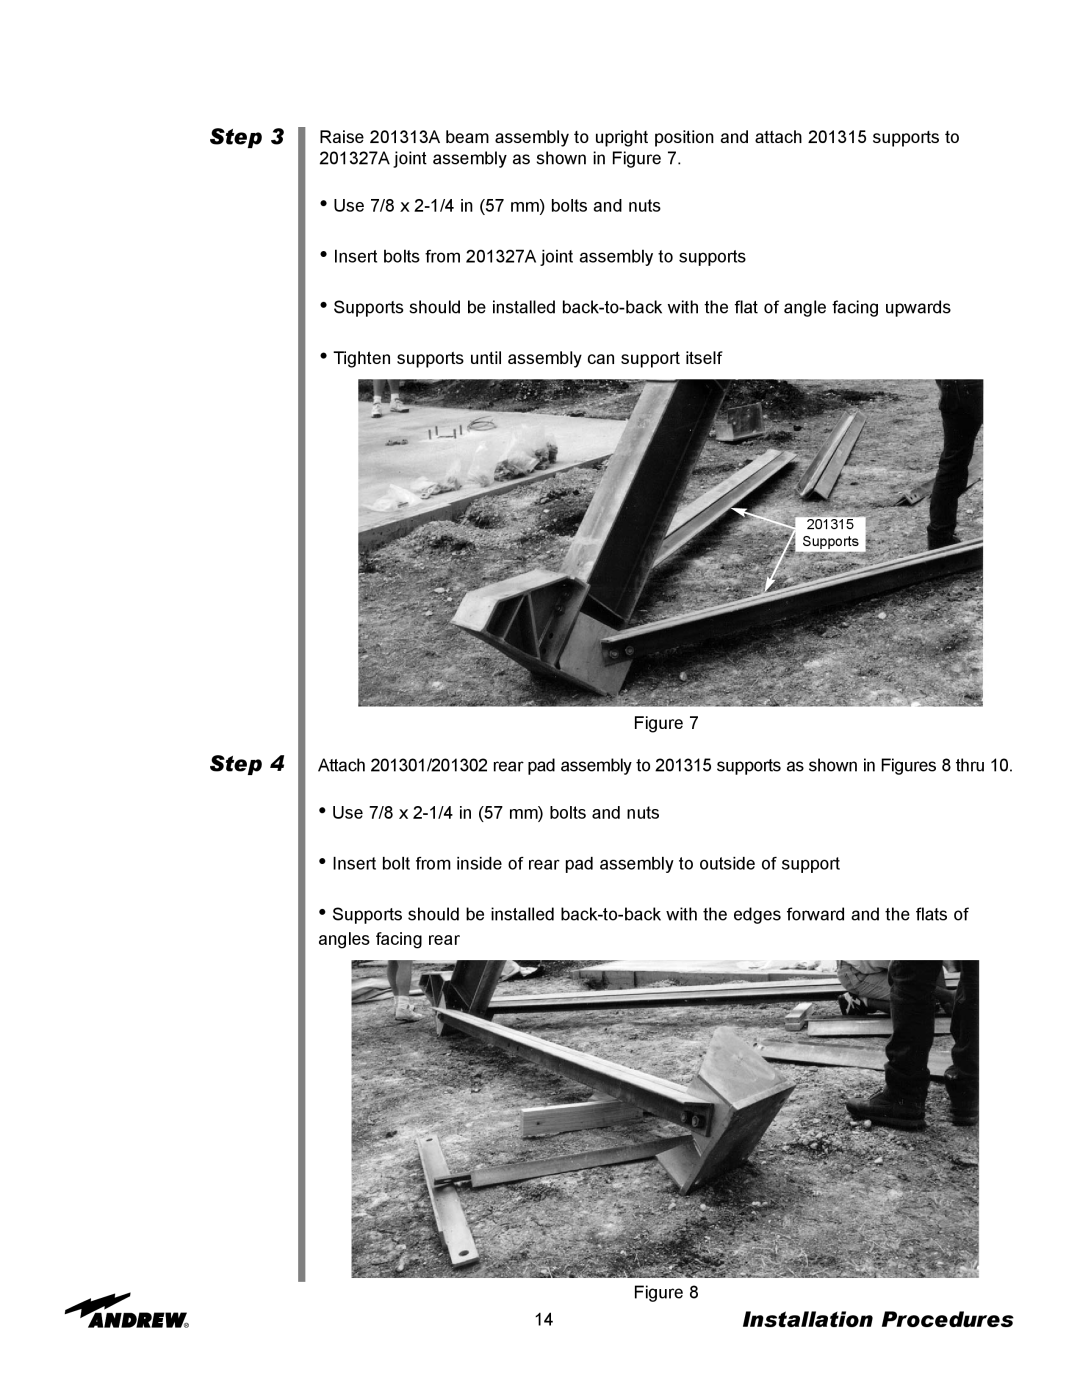 Andrew ES73 manual Step Step, Installation Procedures 